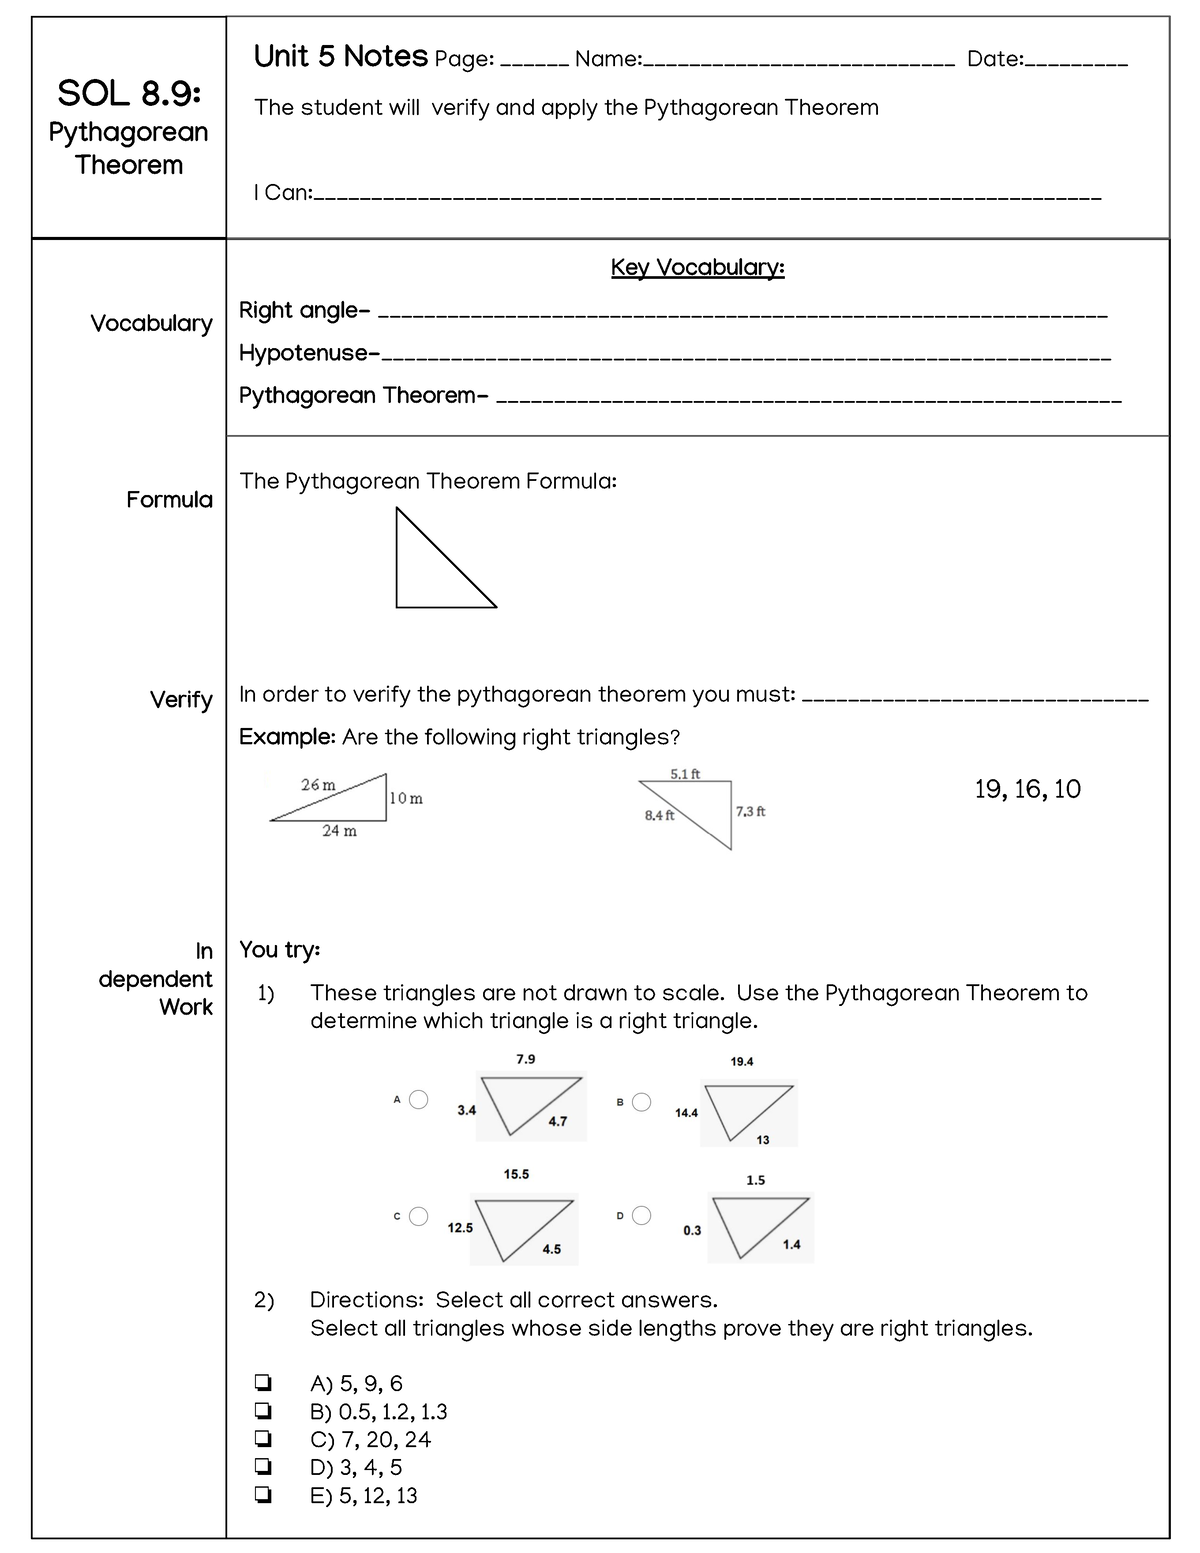 Colton Reich - Pythagorean Theorem- Student Notes - Key Vocabulary ...